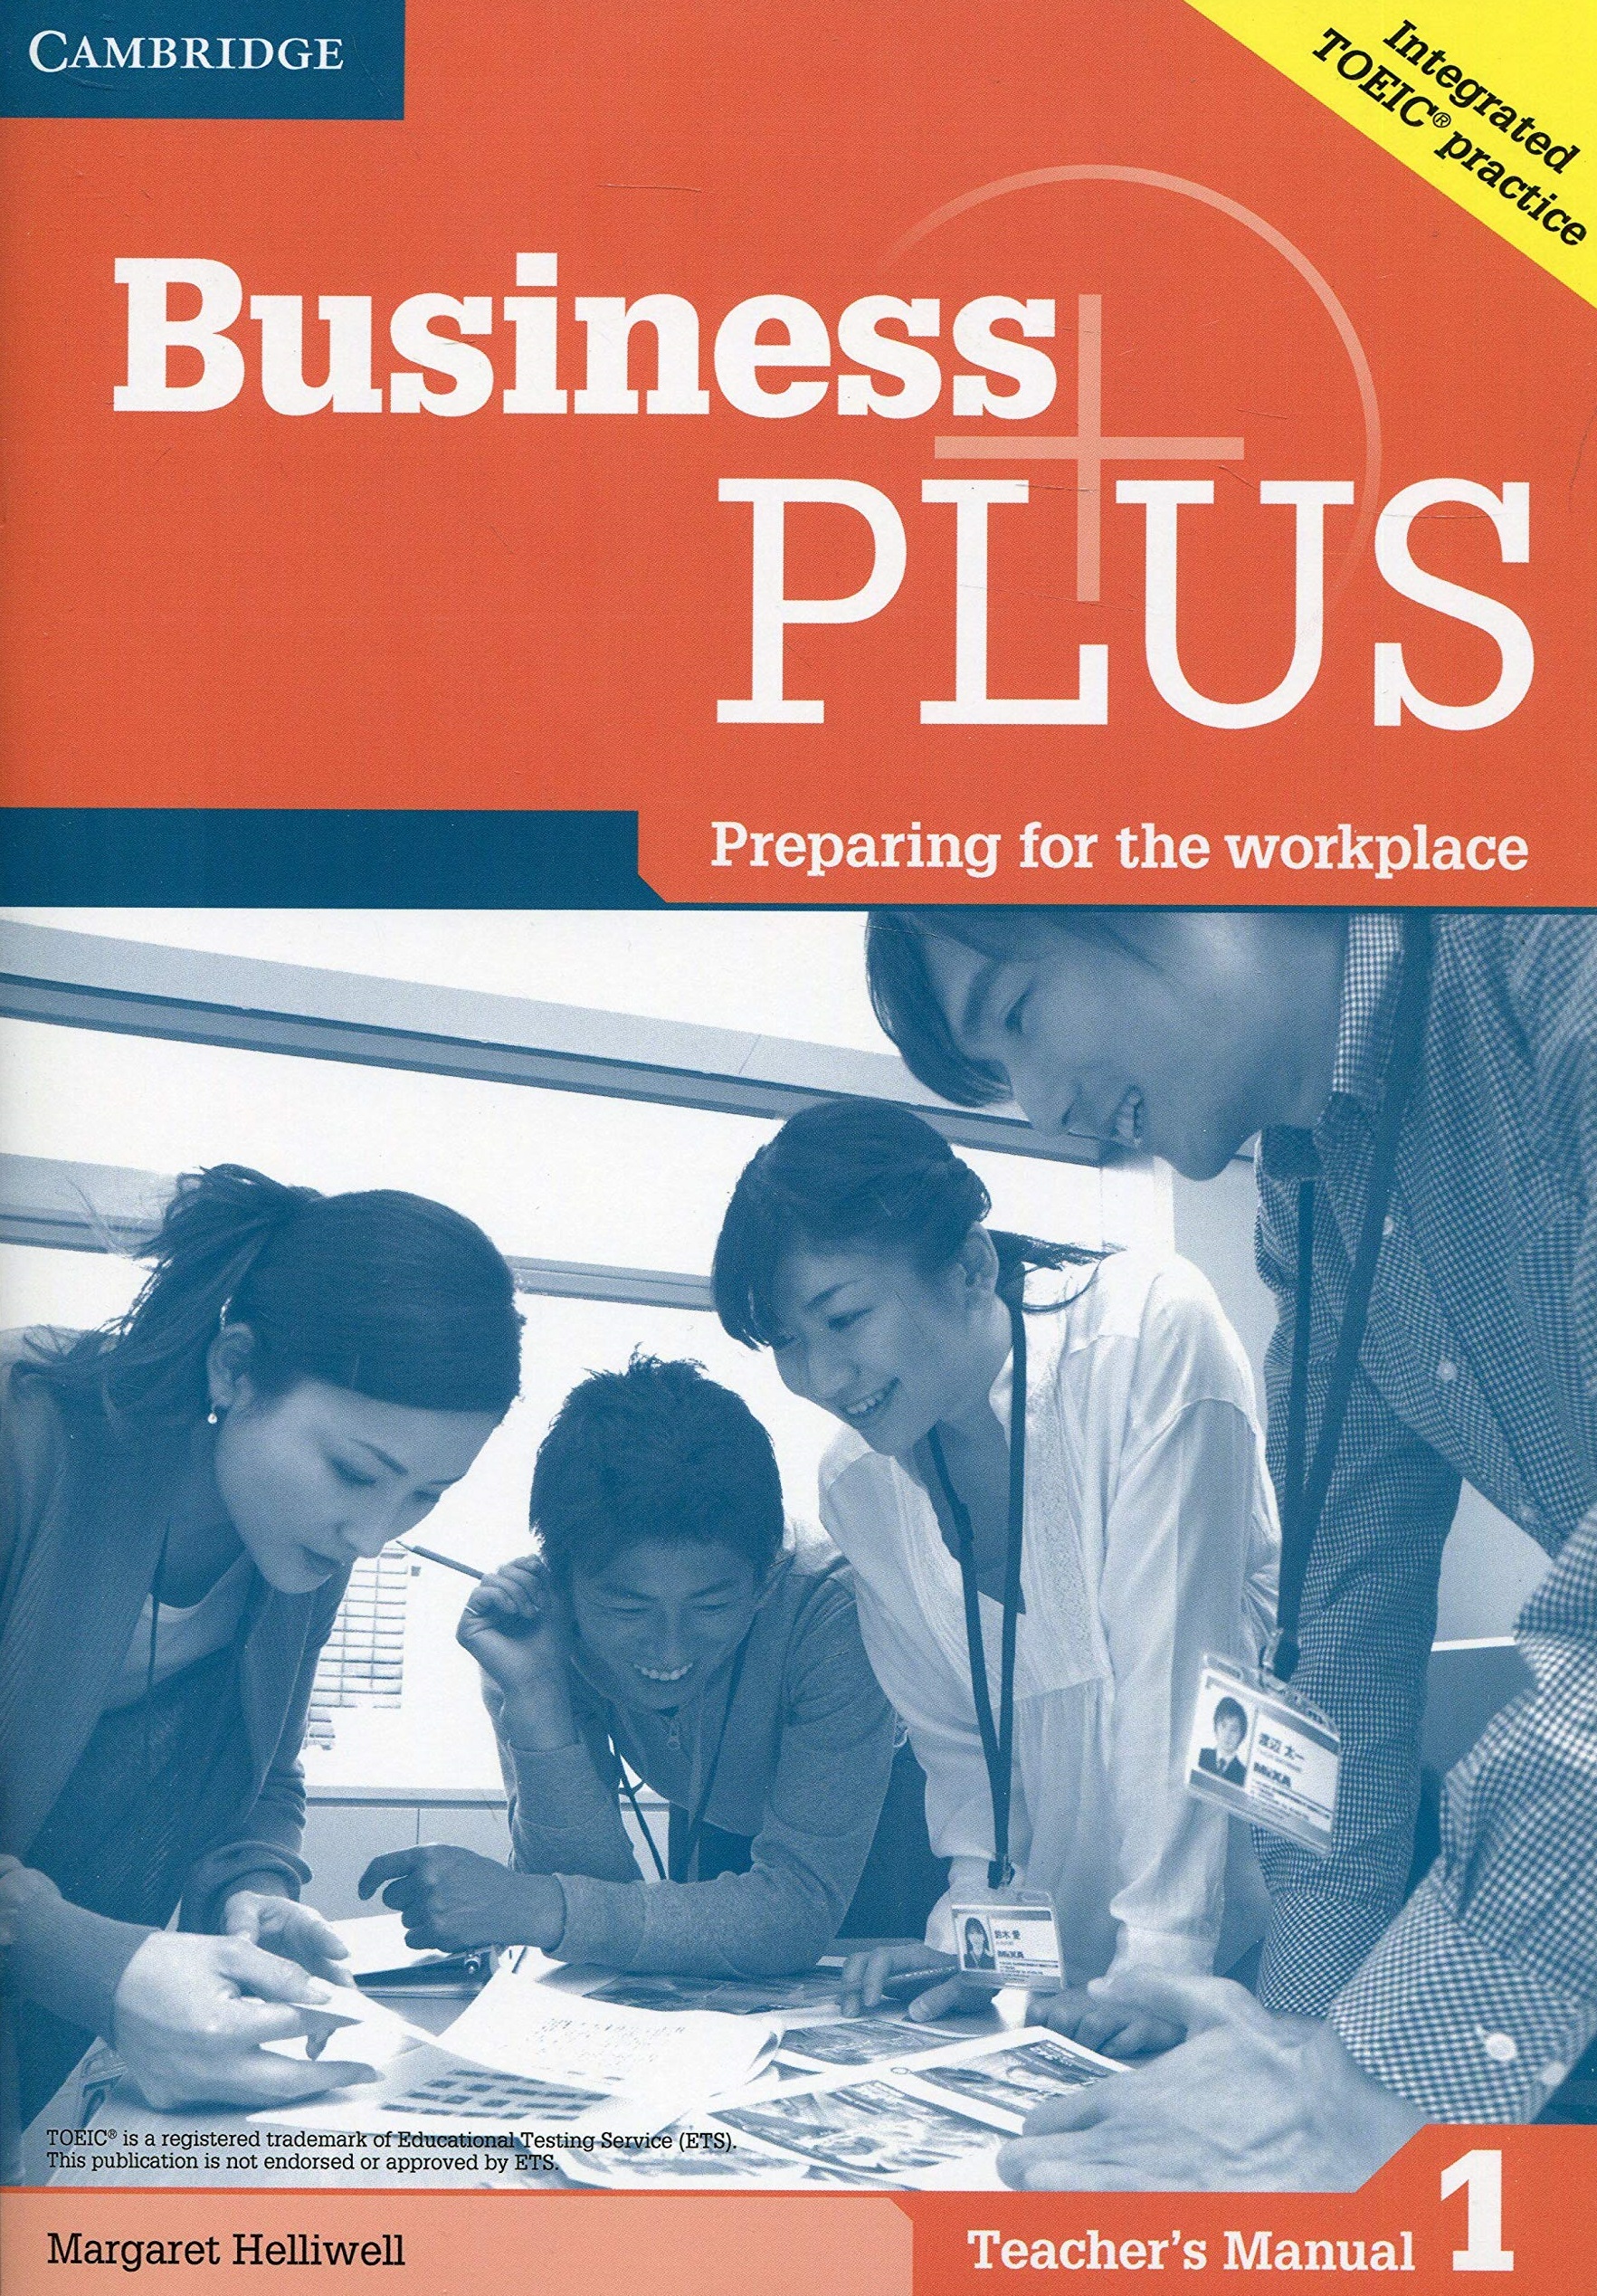 Cambridge teachers book. Business English книга. Cambridge Business English. Бизнес английский учебник Cambridge. English for Business studies.